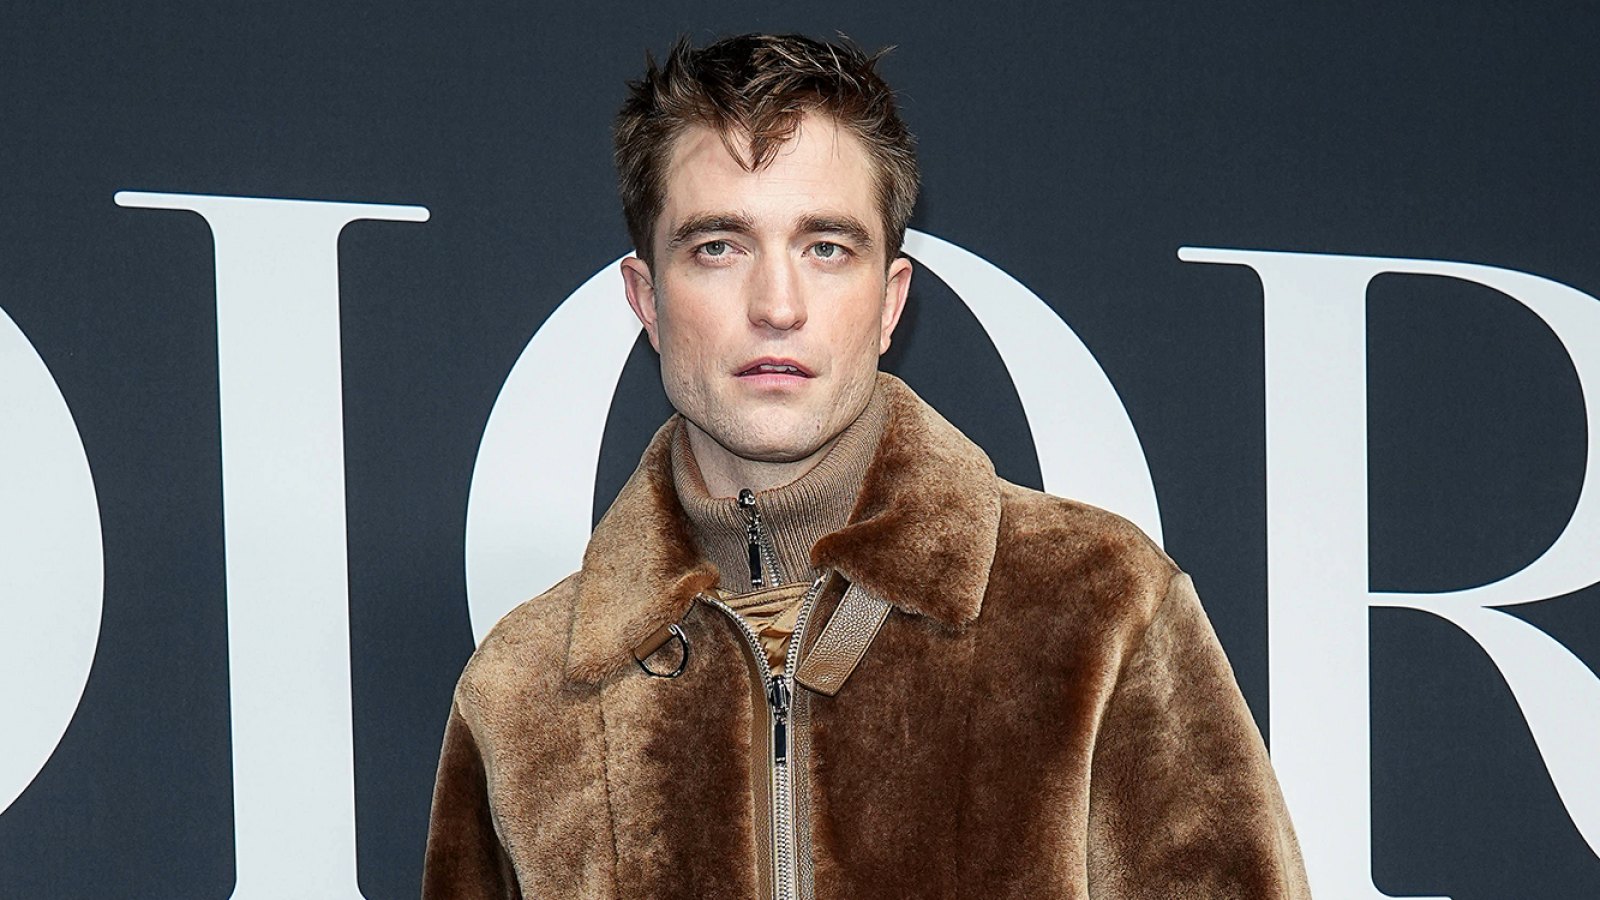 Robert Pattinson Rock a Sparkly Skirt at Paris Fashion Week: Pics